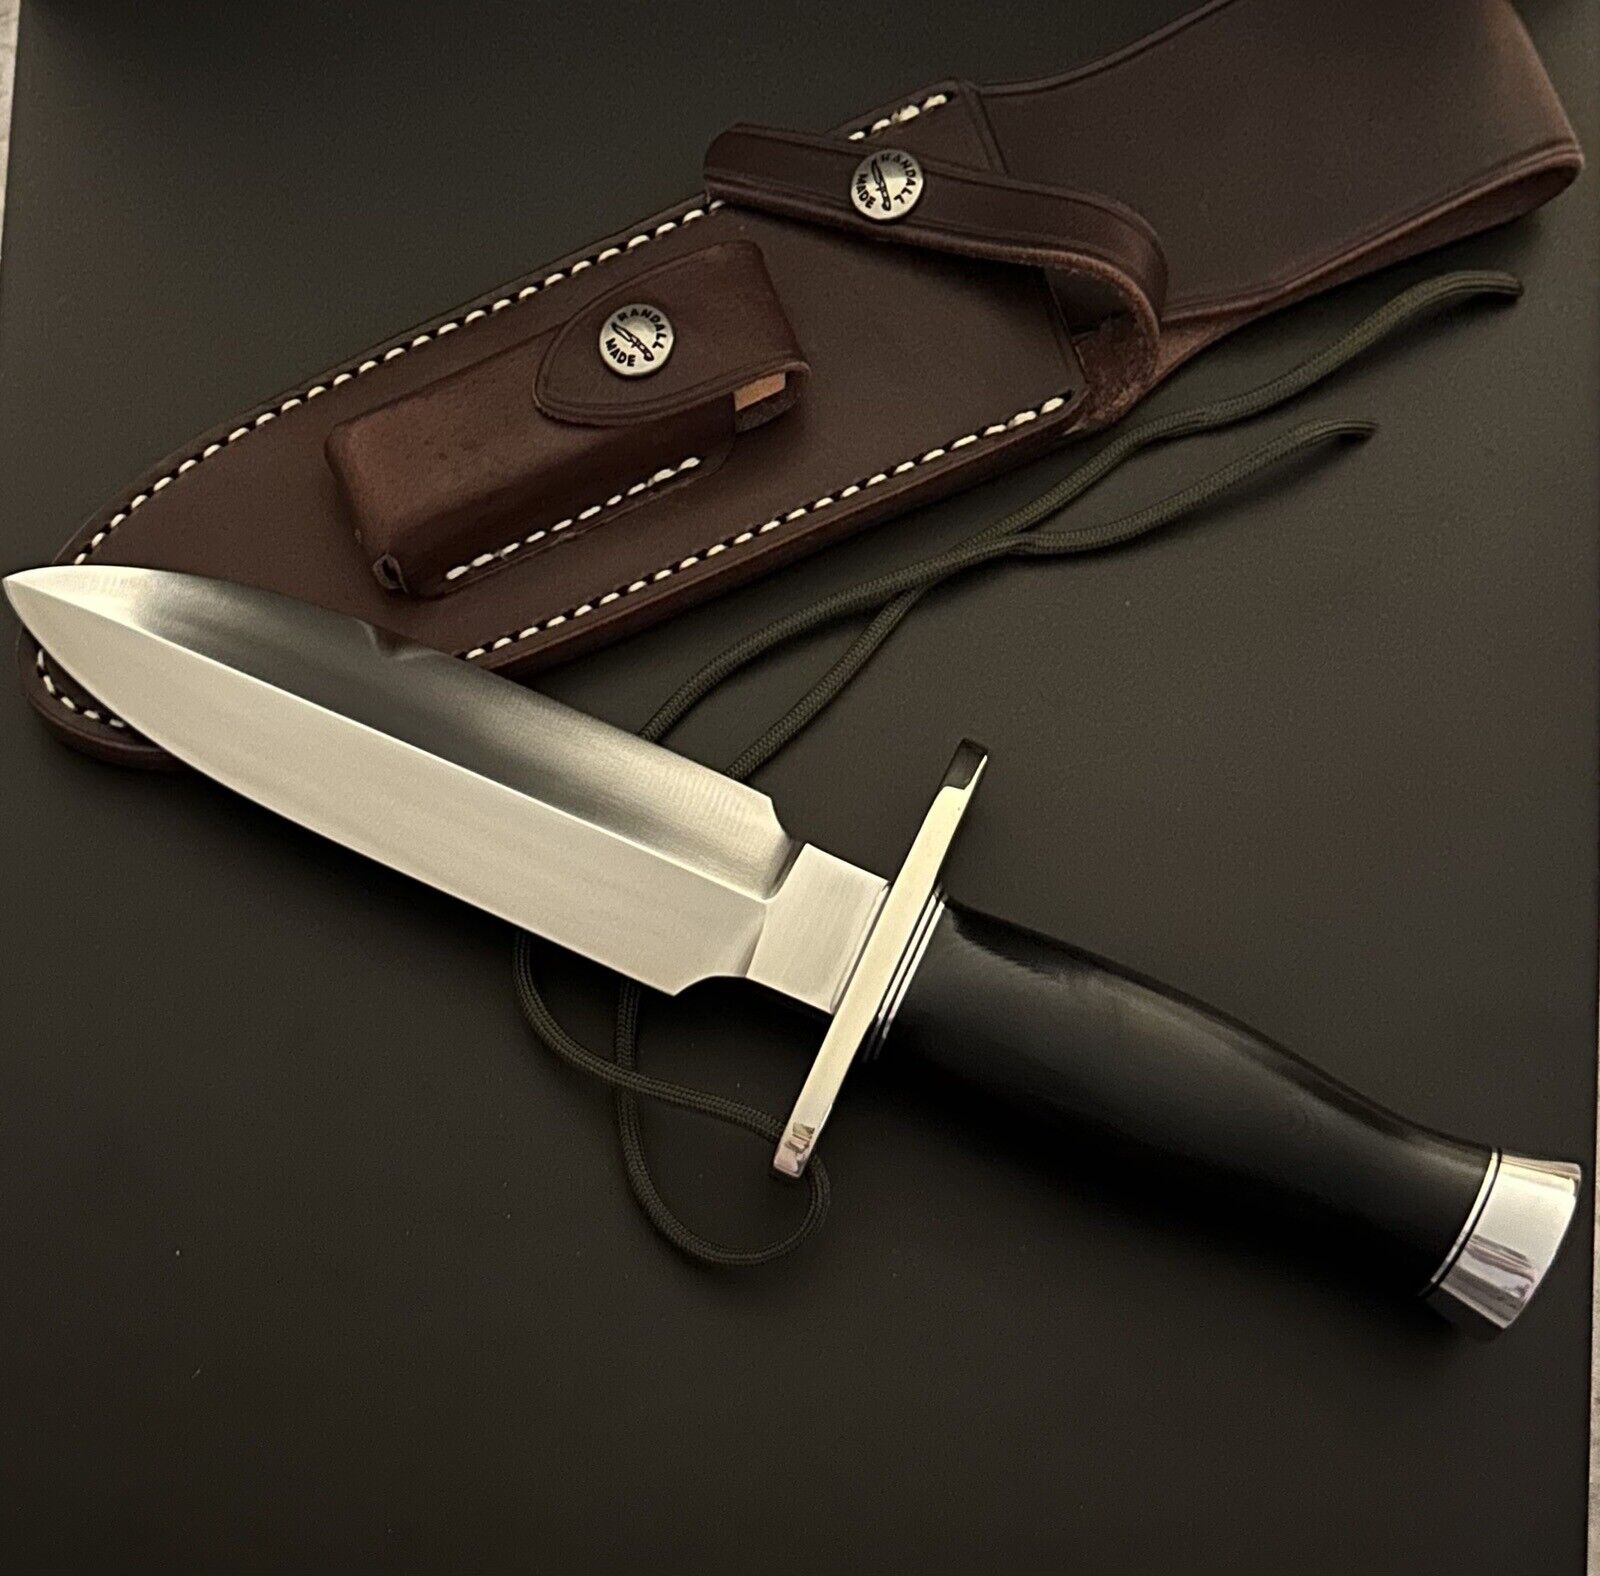 🔥 Randall Tom Clinton TC Special Dealer Exclisive Knife